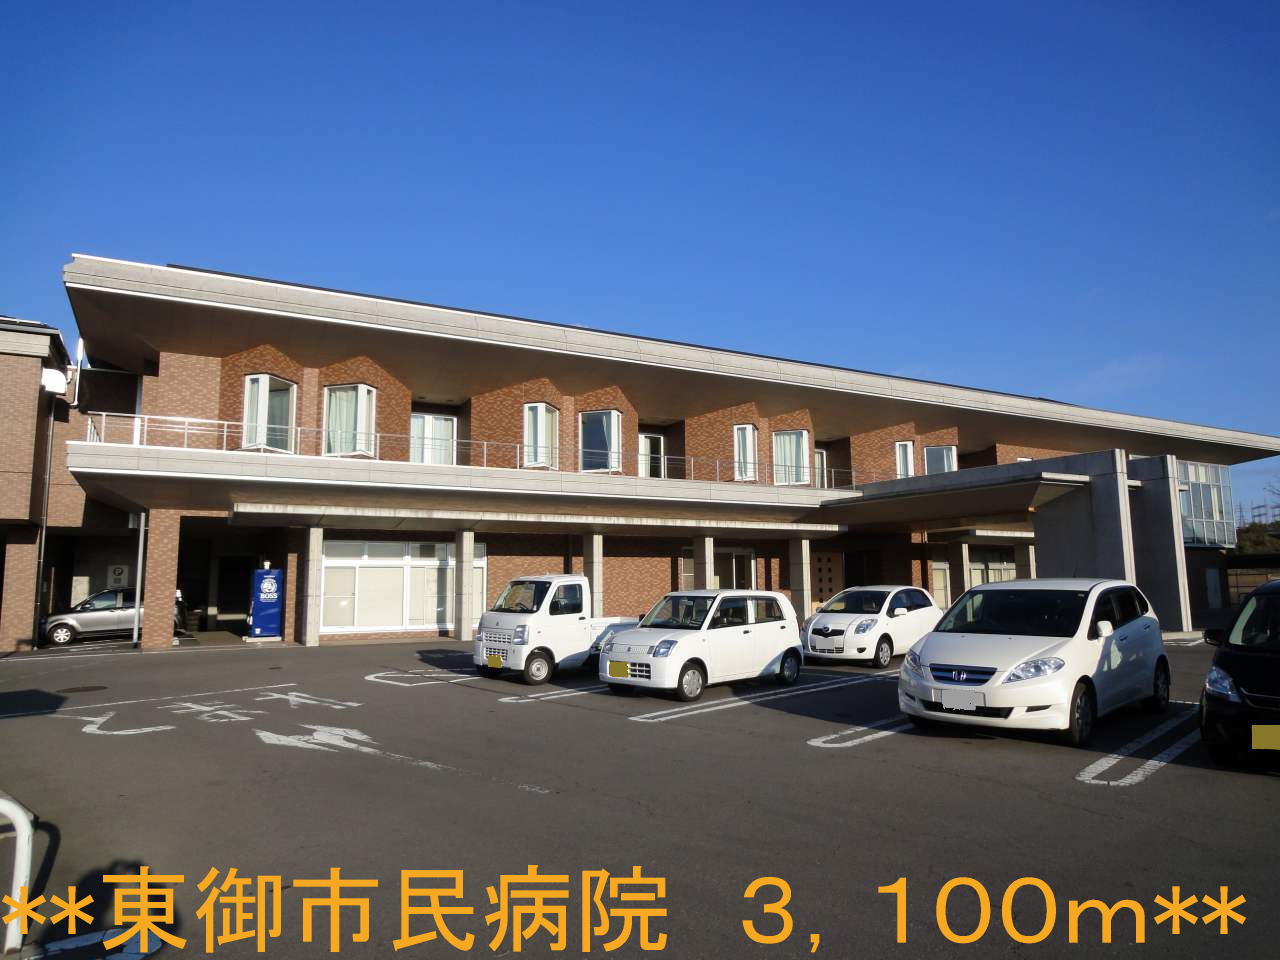 Hospital. Tomi City Hospital (hospital) to 3100m